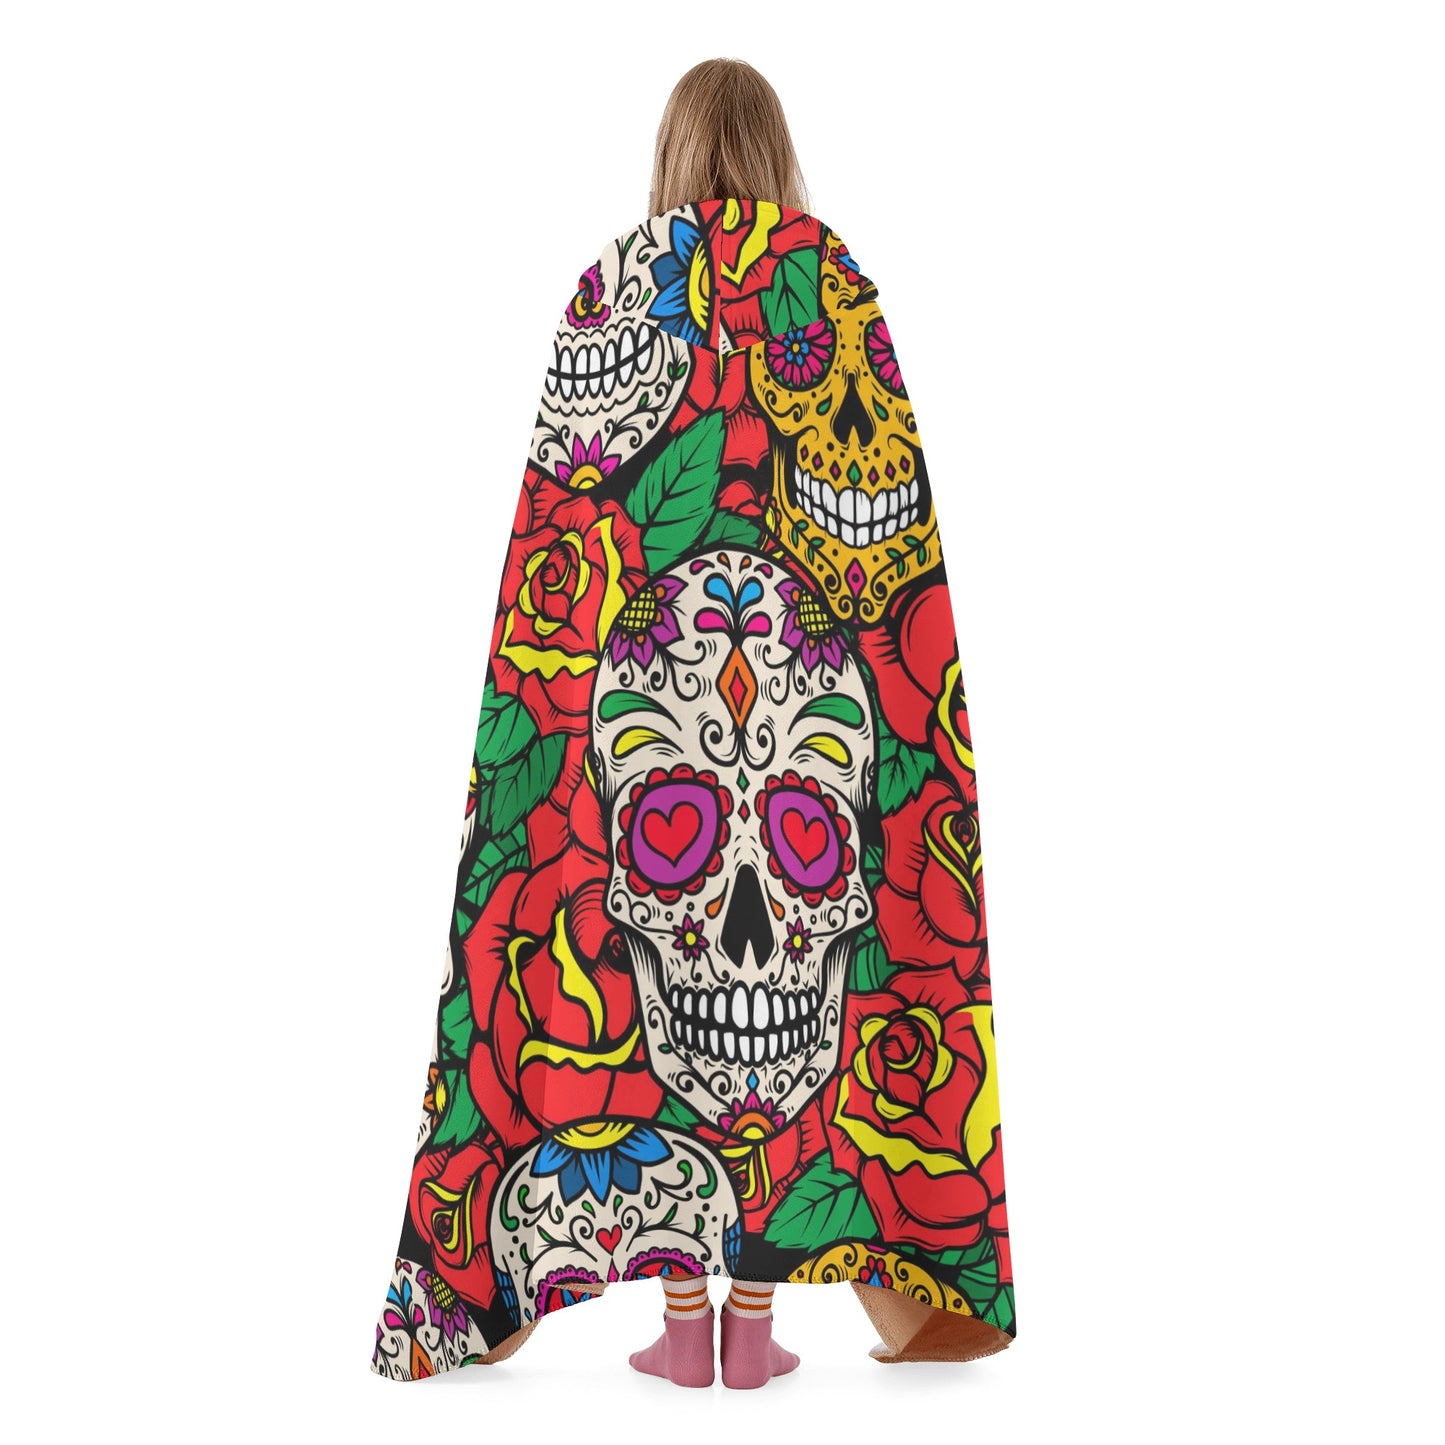 Dia de los muertos skull flannel hooded, mexican skull blanket hoodie, candy skull flannel hooded, sugar skull girl blanket hooded, floral s